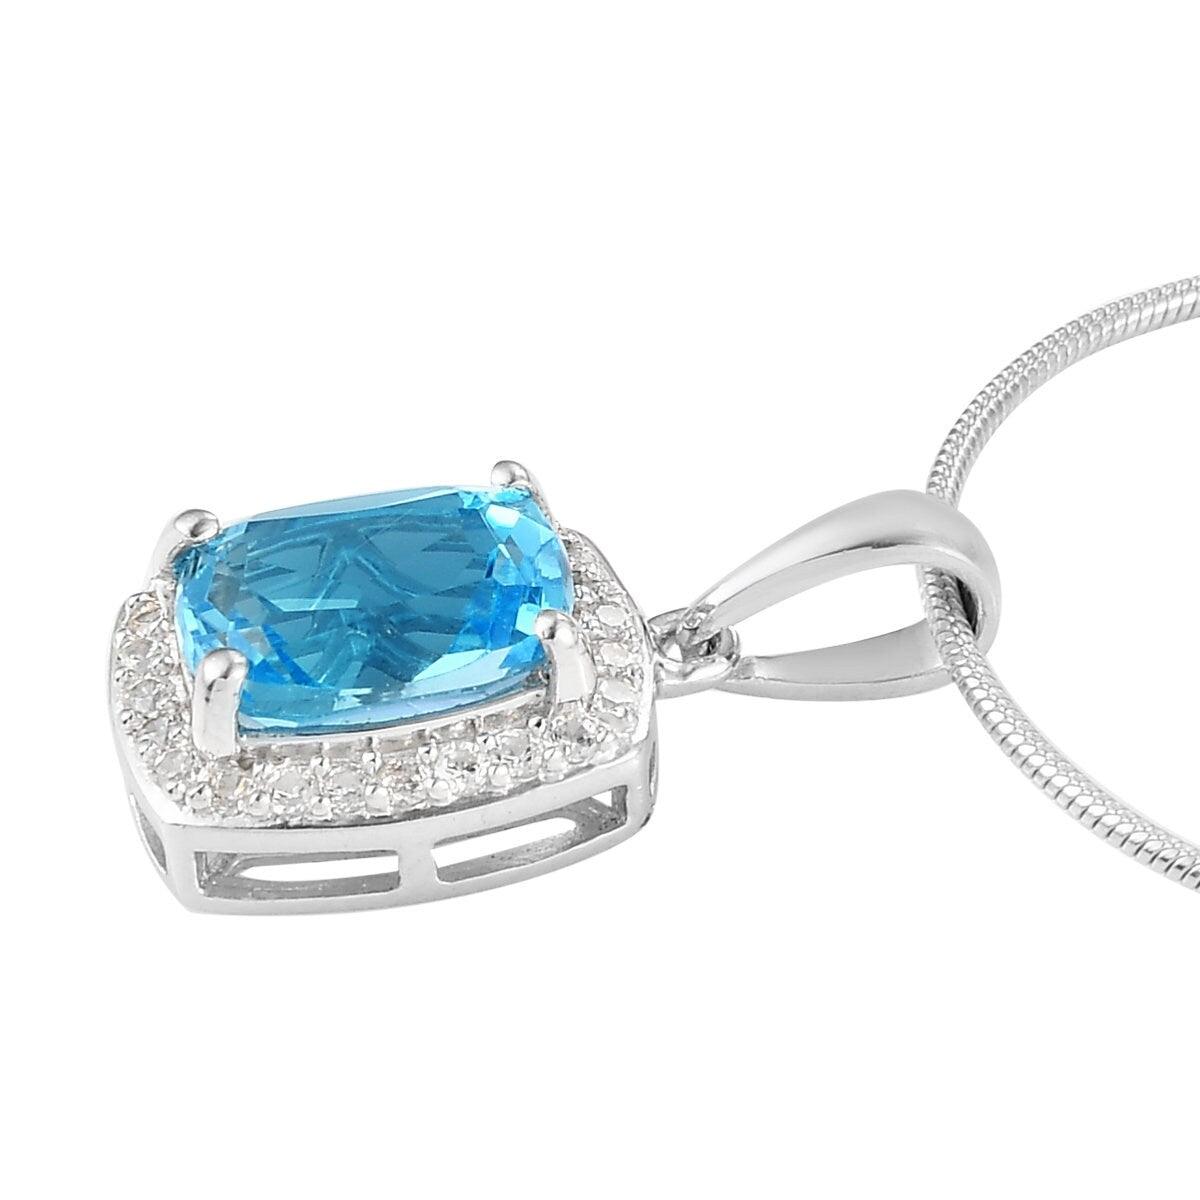 Genuine Swiss Blue Topaz Pendant, Halo Pendant, December Birthstone Necklace, 925 Sterling Silver, Gift for her - Inspiring Jewellery